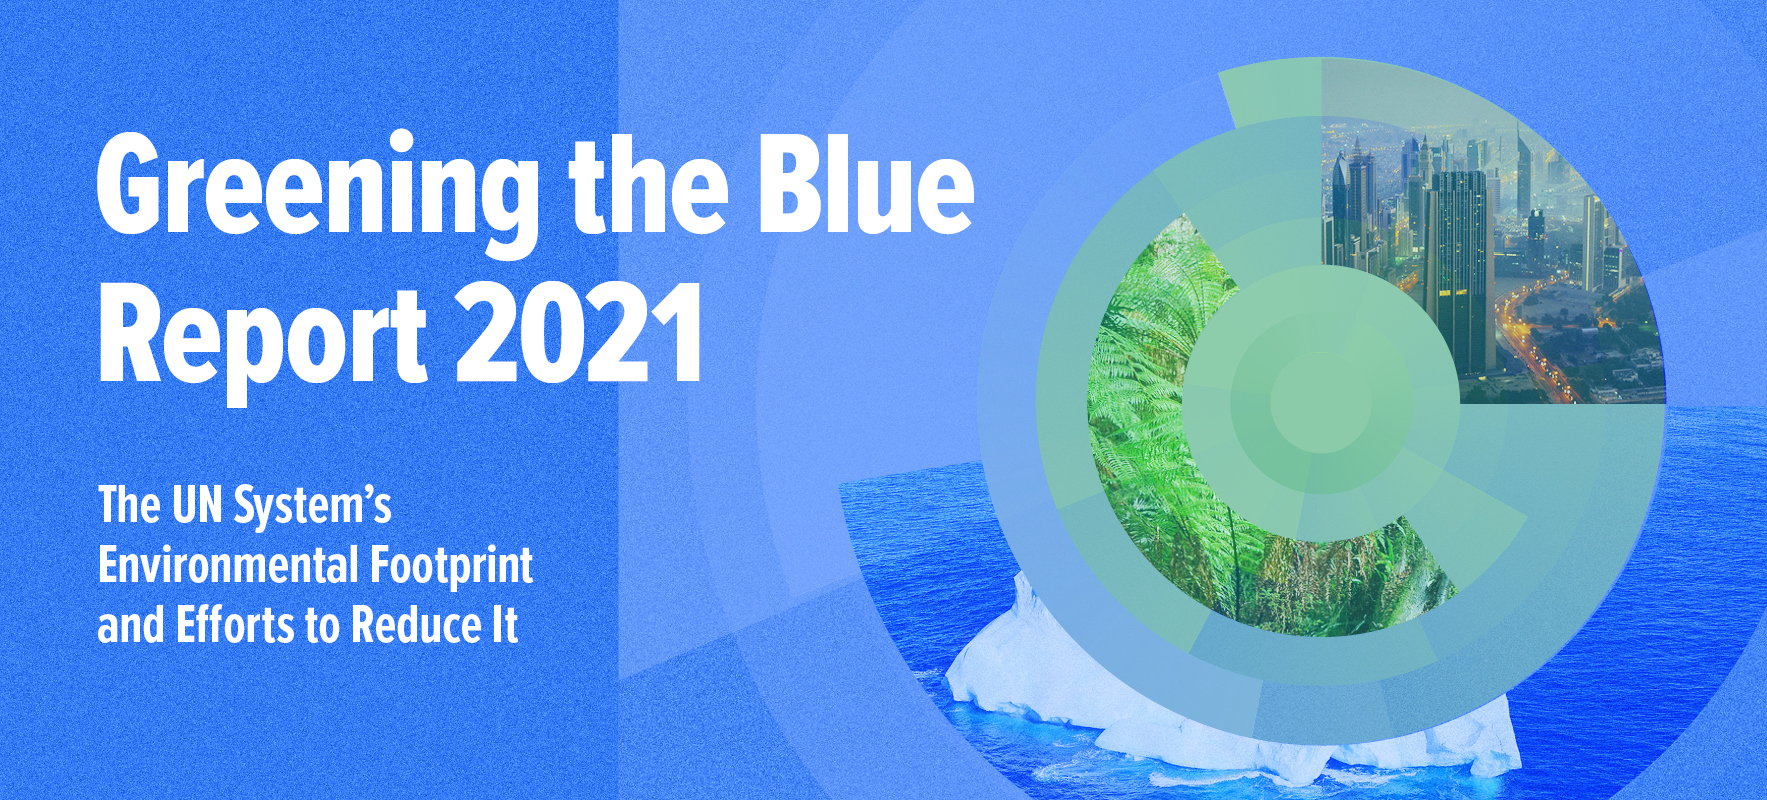 GREENING THE BLUE REPORT 2021